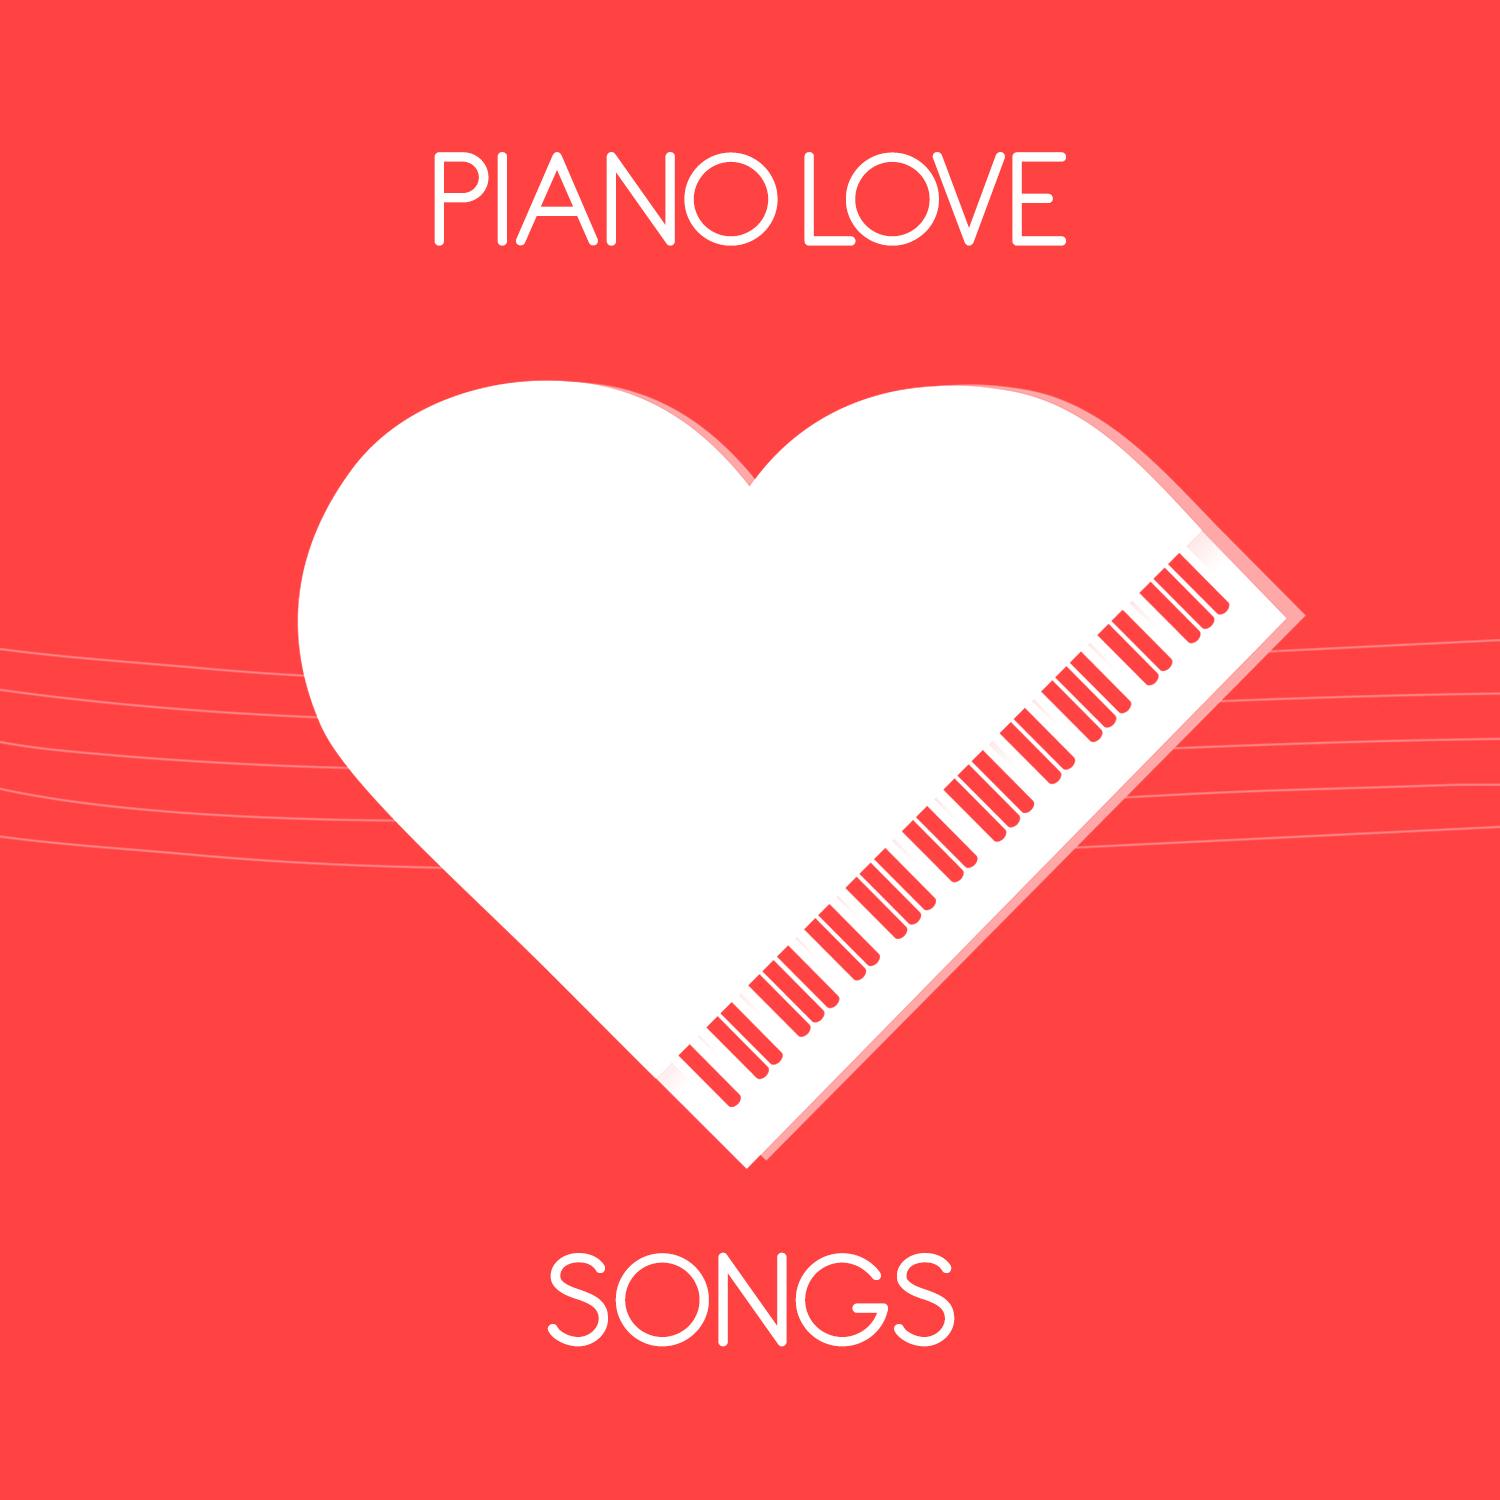 Piano Love Songs